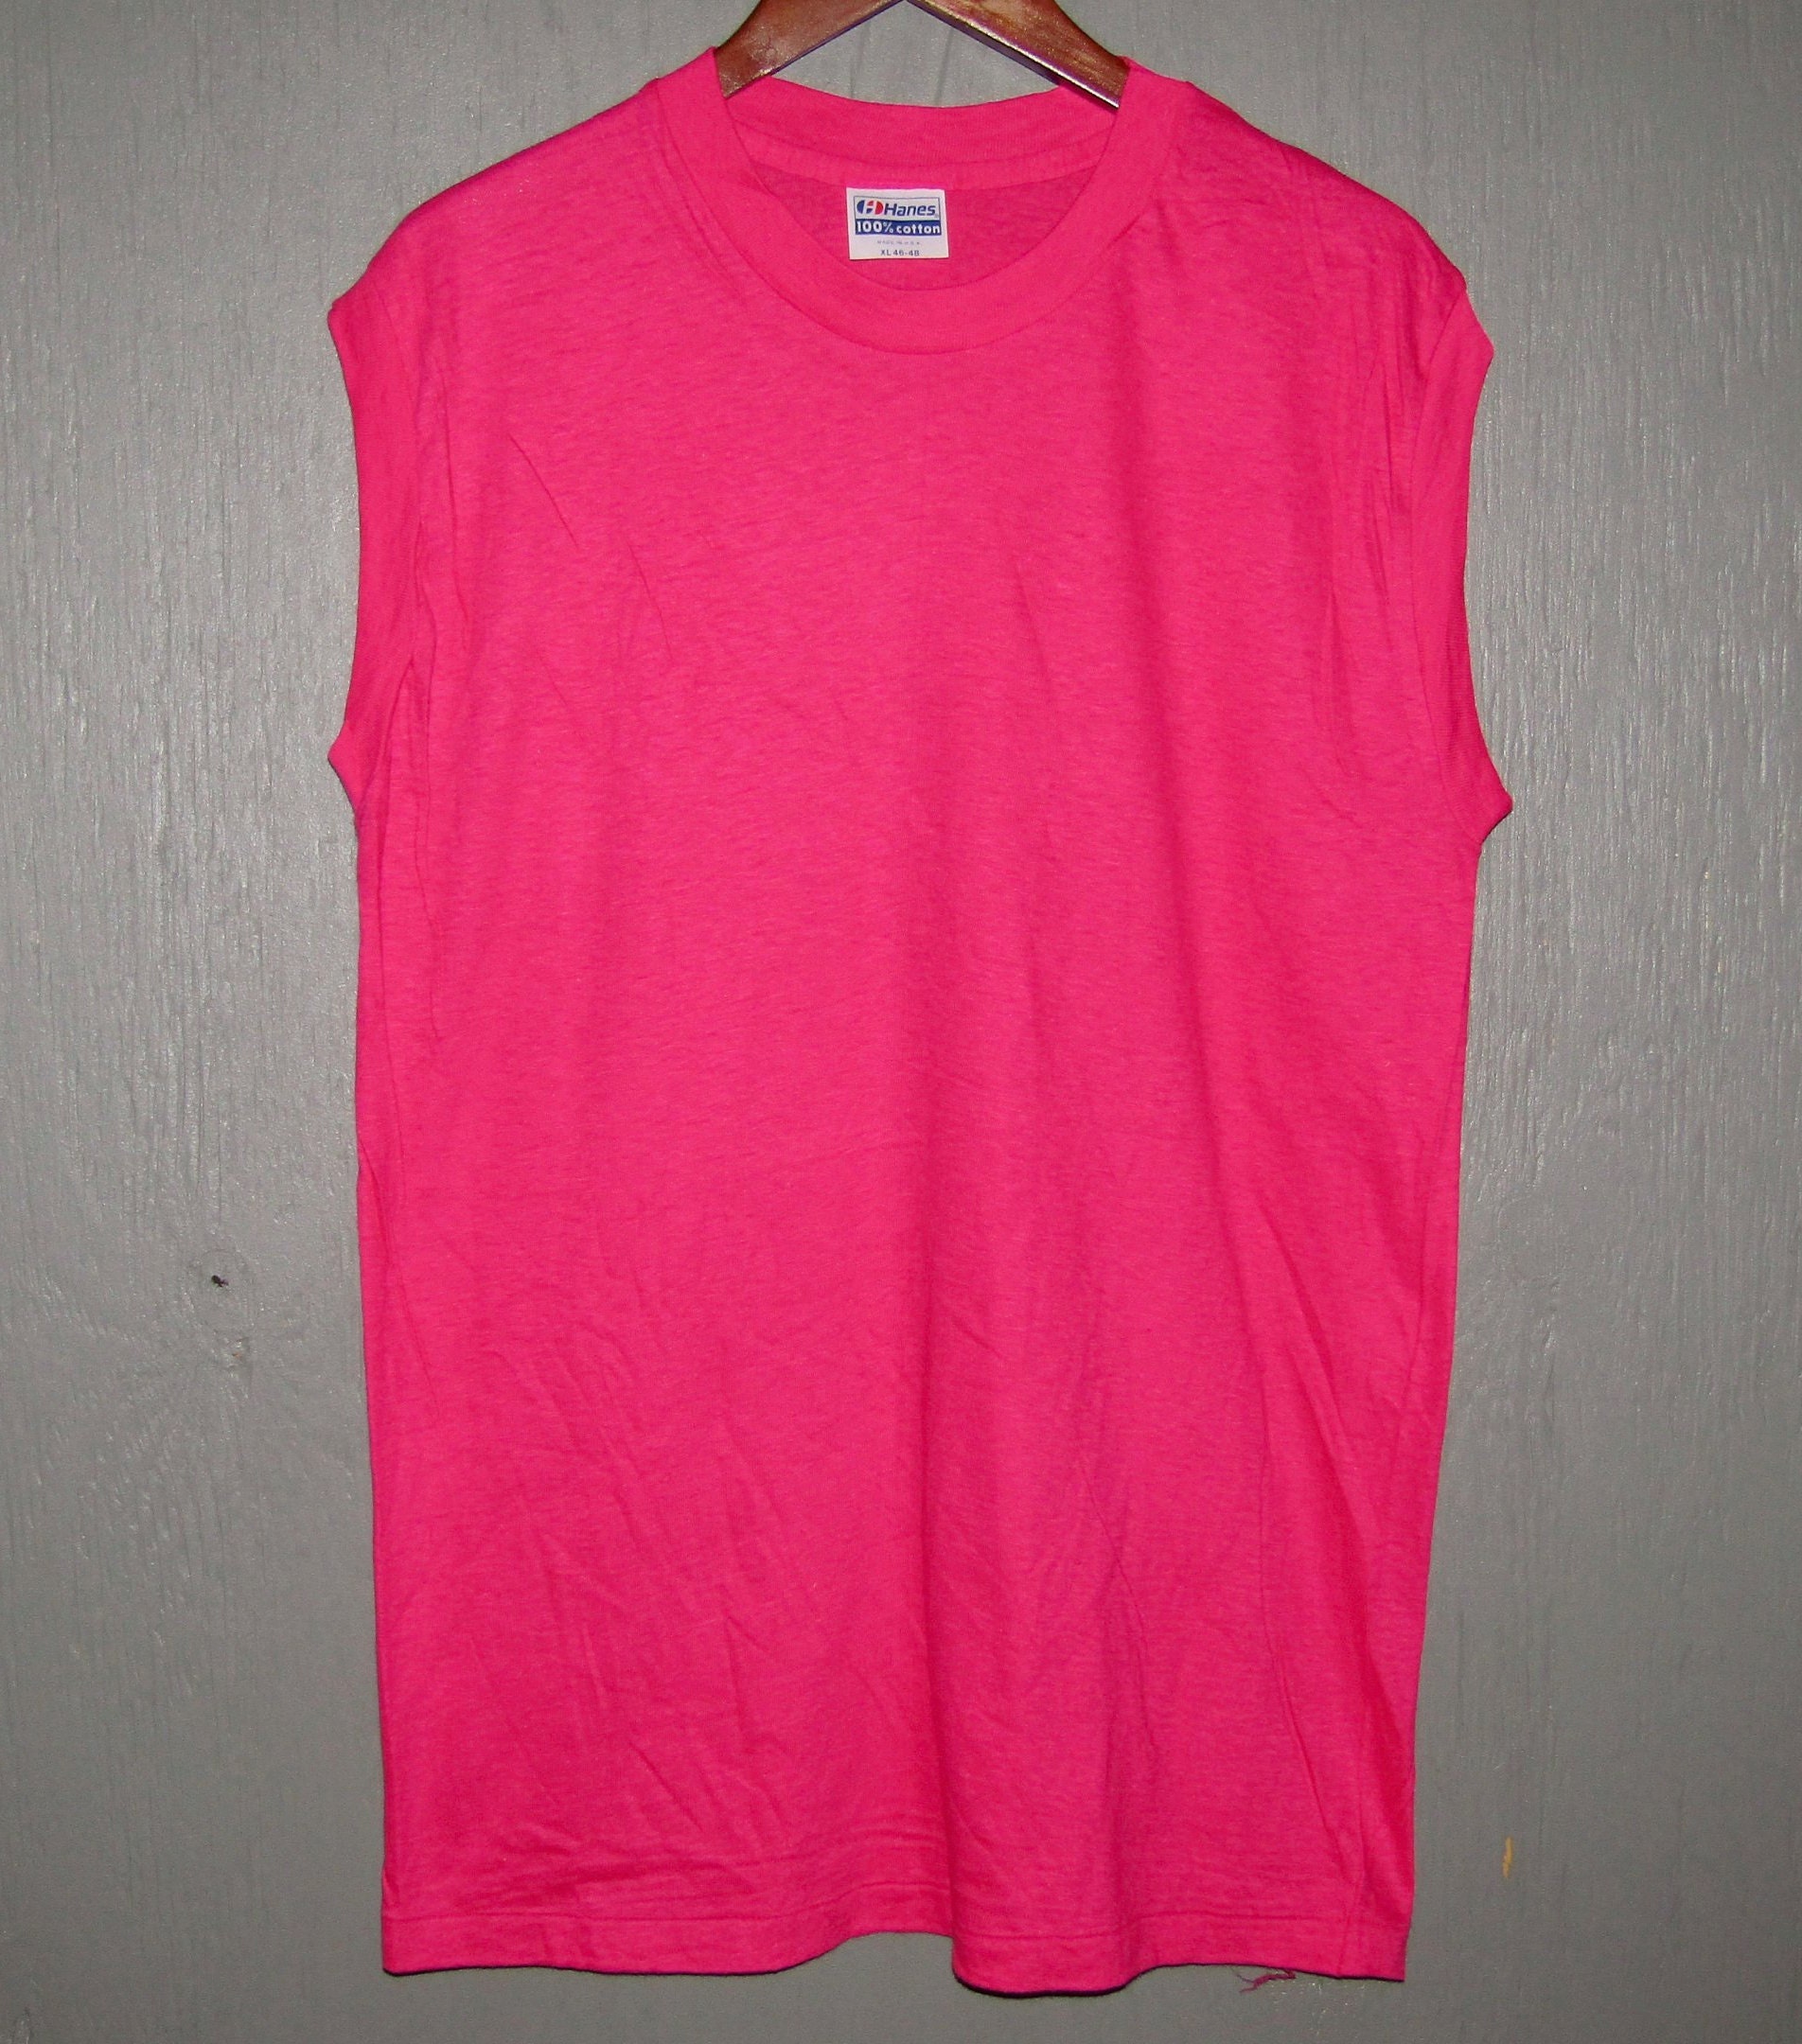 influenza Interessant erklære L * NOS vtg 80s Blank Hanes muscle t shirt * Fuchsia * 38.166 pink